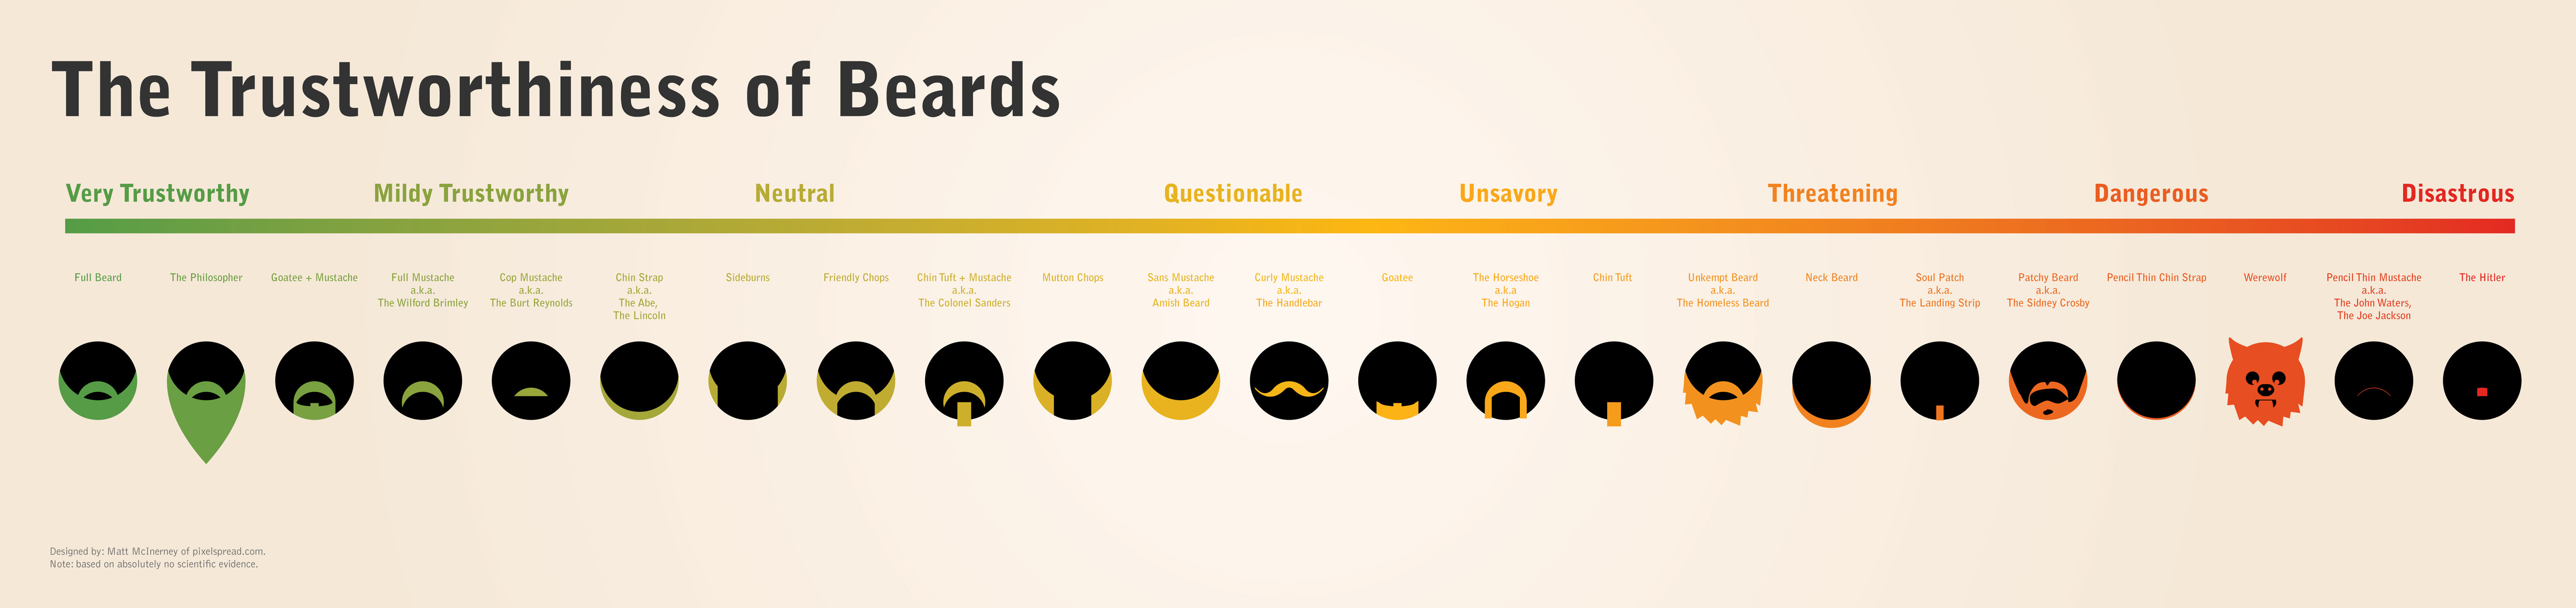 trustworthiness-of-beards-mustaches-chart.jpg